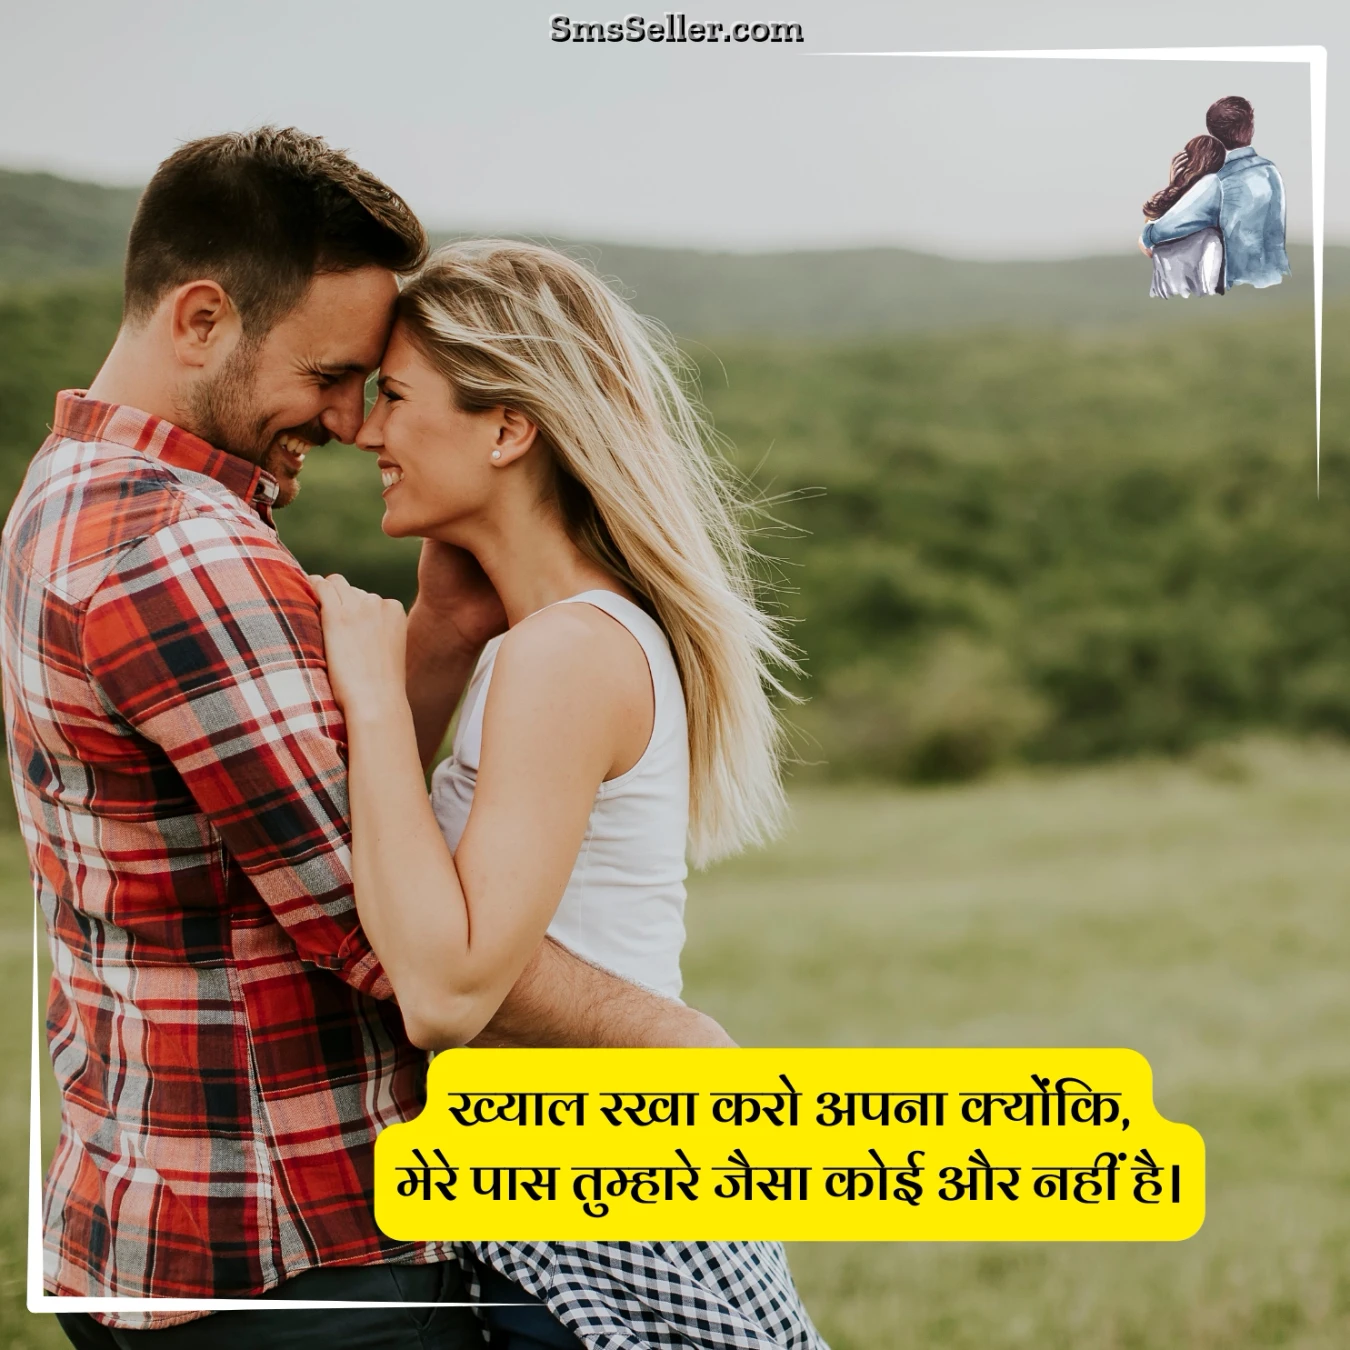 heart touching love quotes in hindi khyal rakho apna